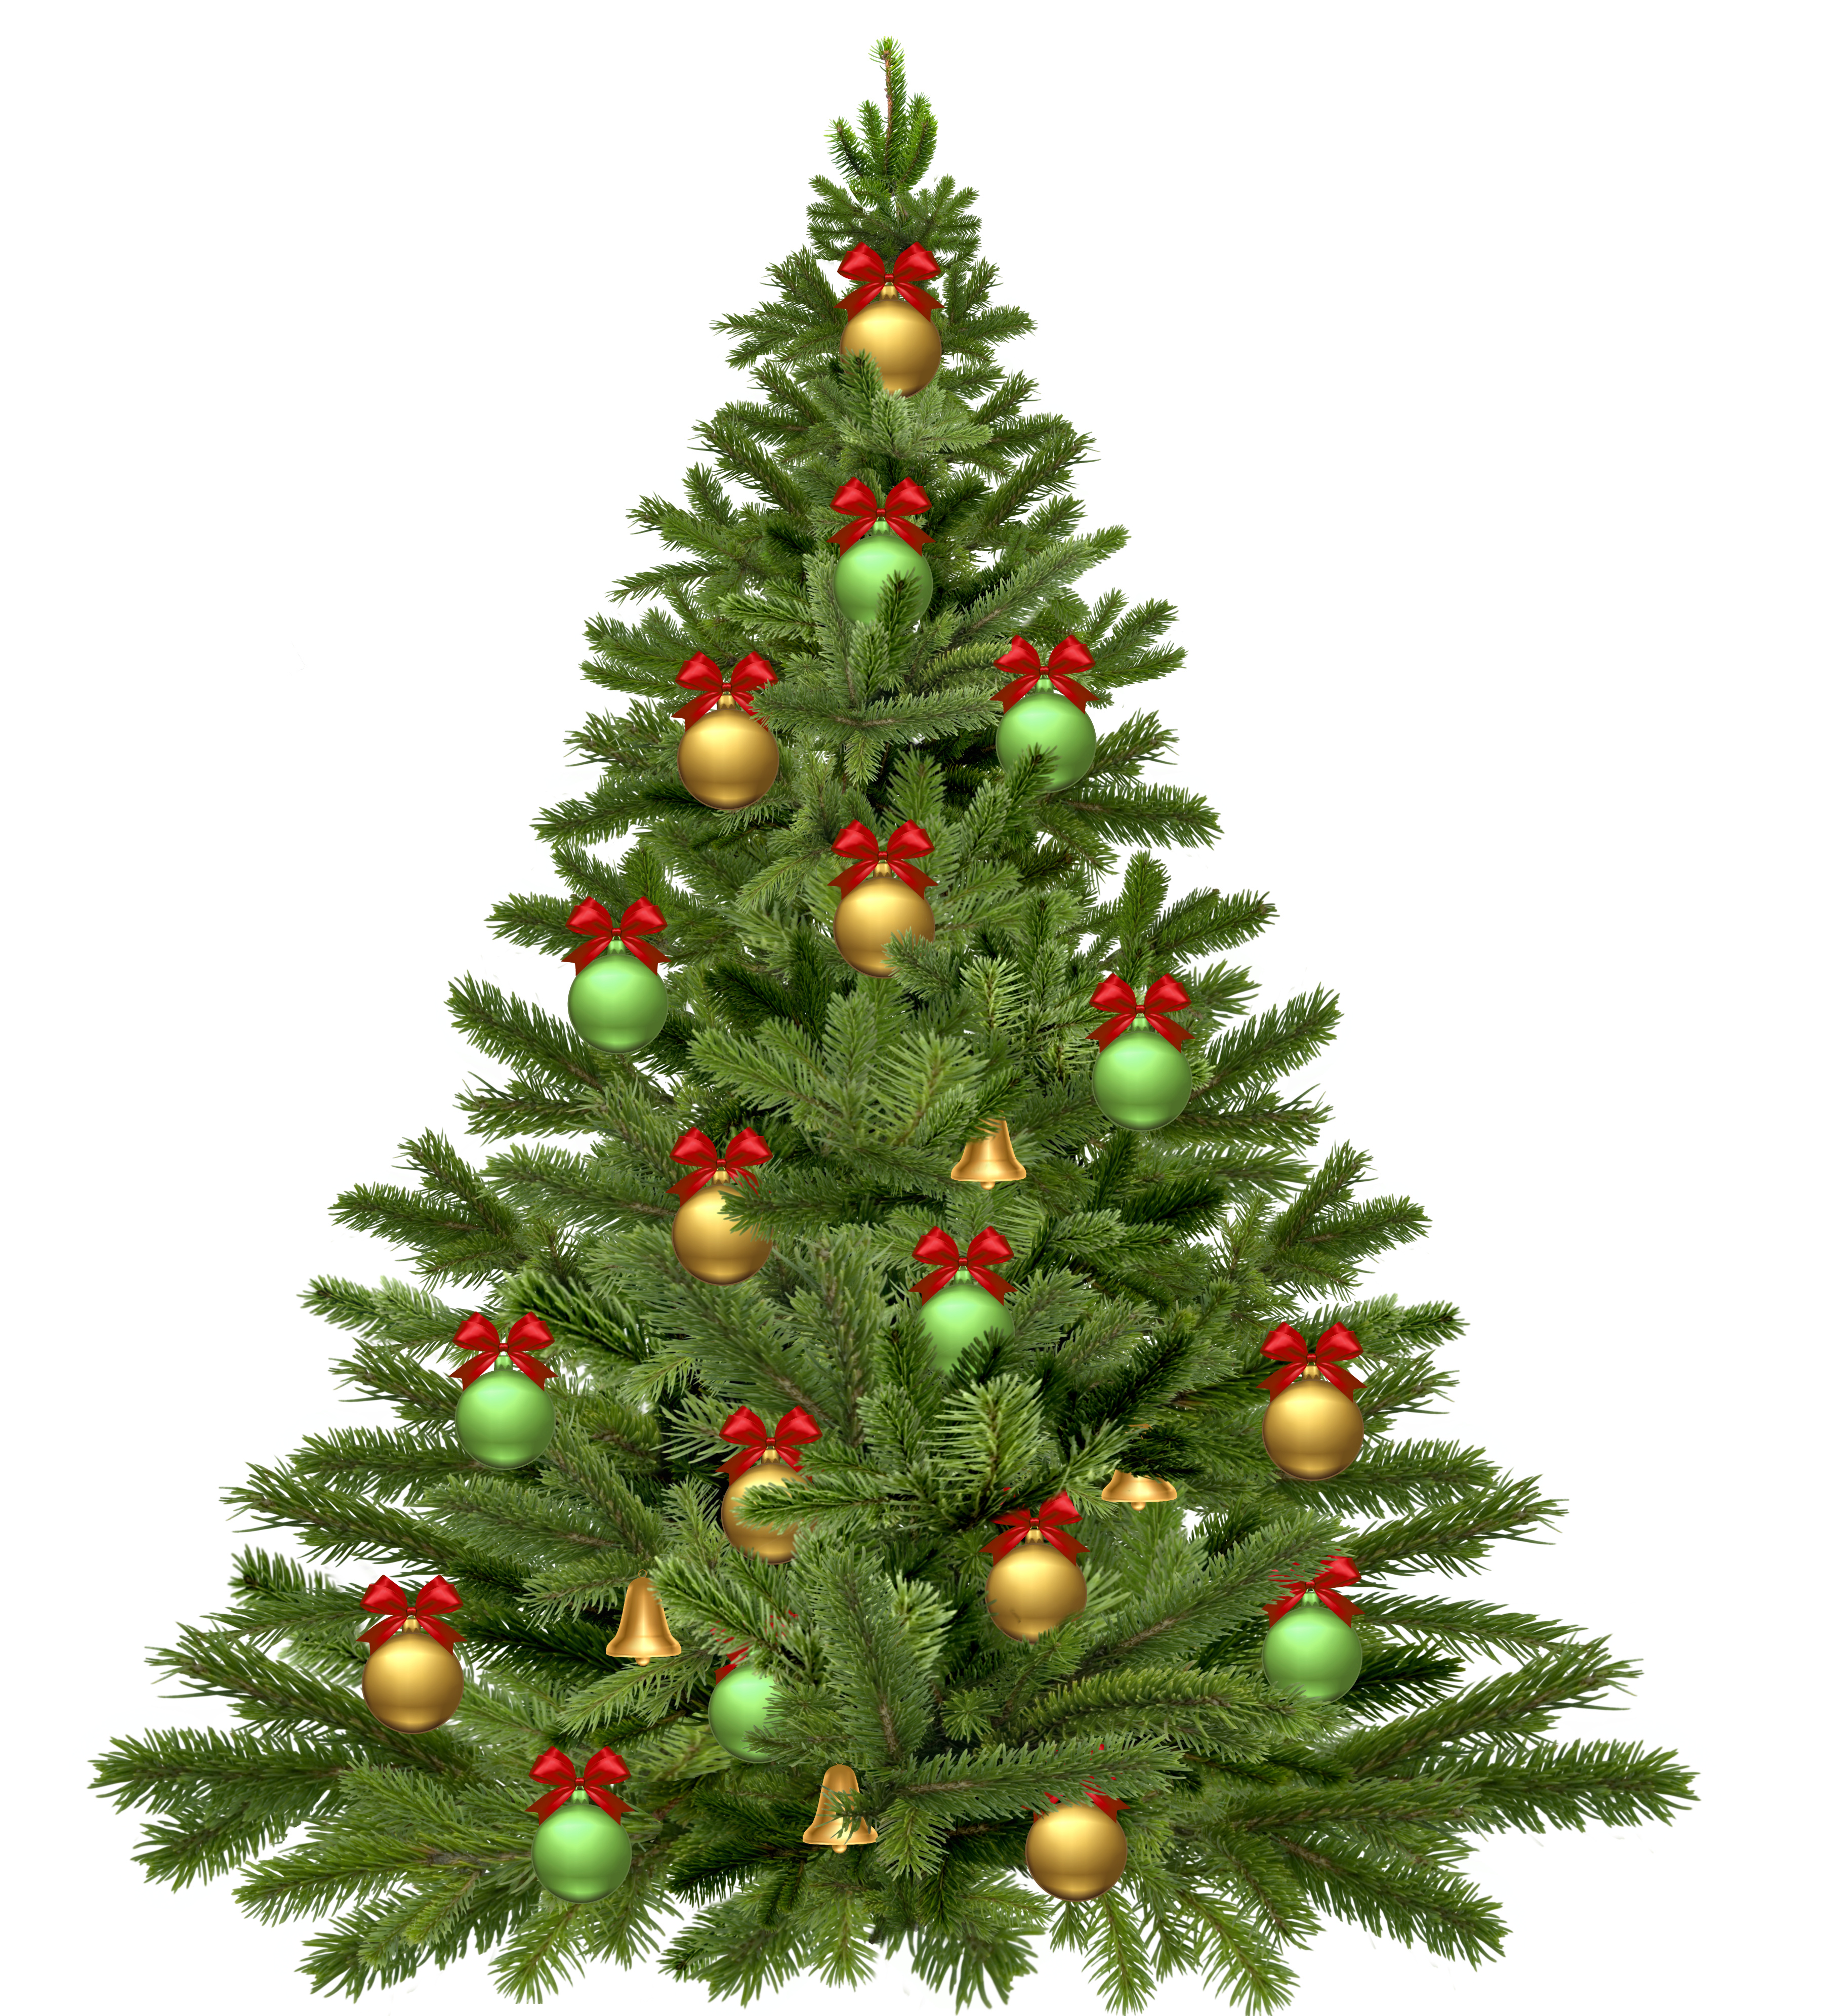 https://s1.1zoom.ru/big3/634/Christmas_Christmas_tree_Balls_White_background_597609_3600x3983.jpg